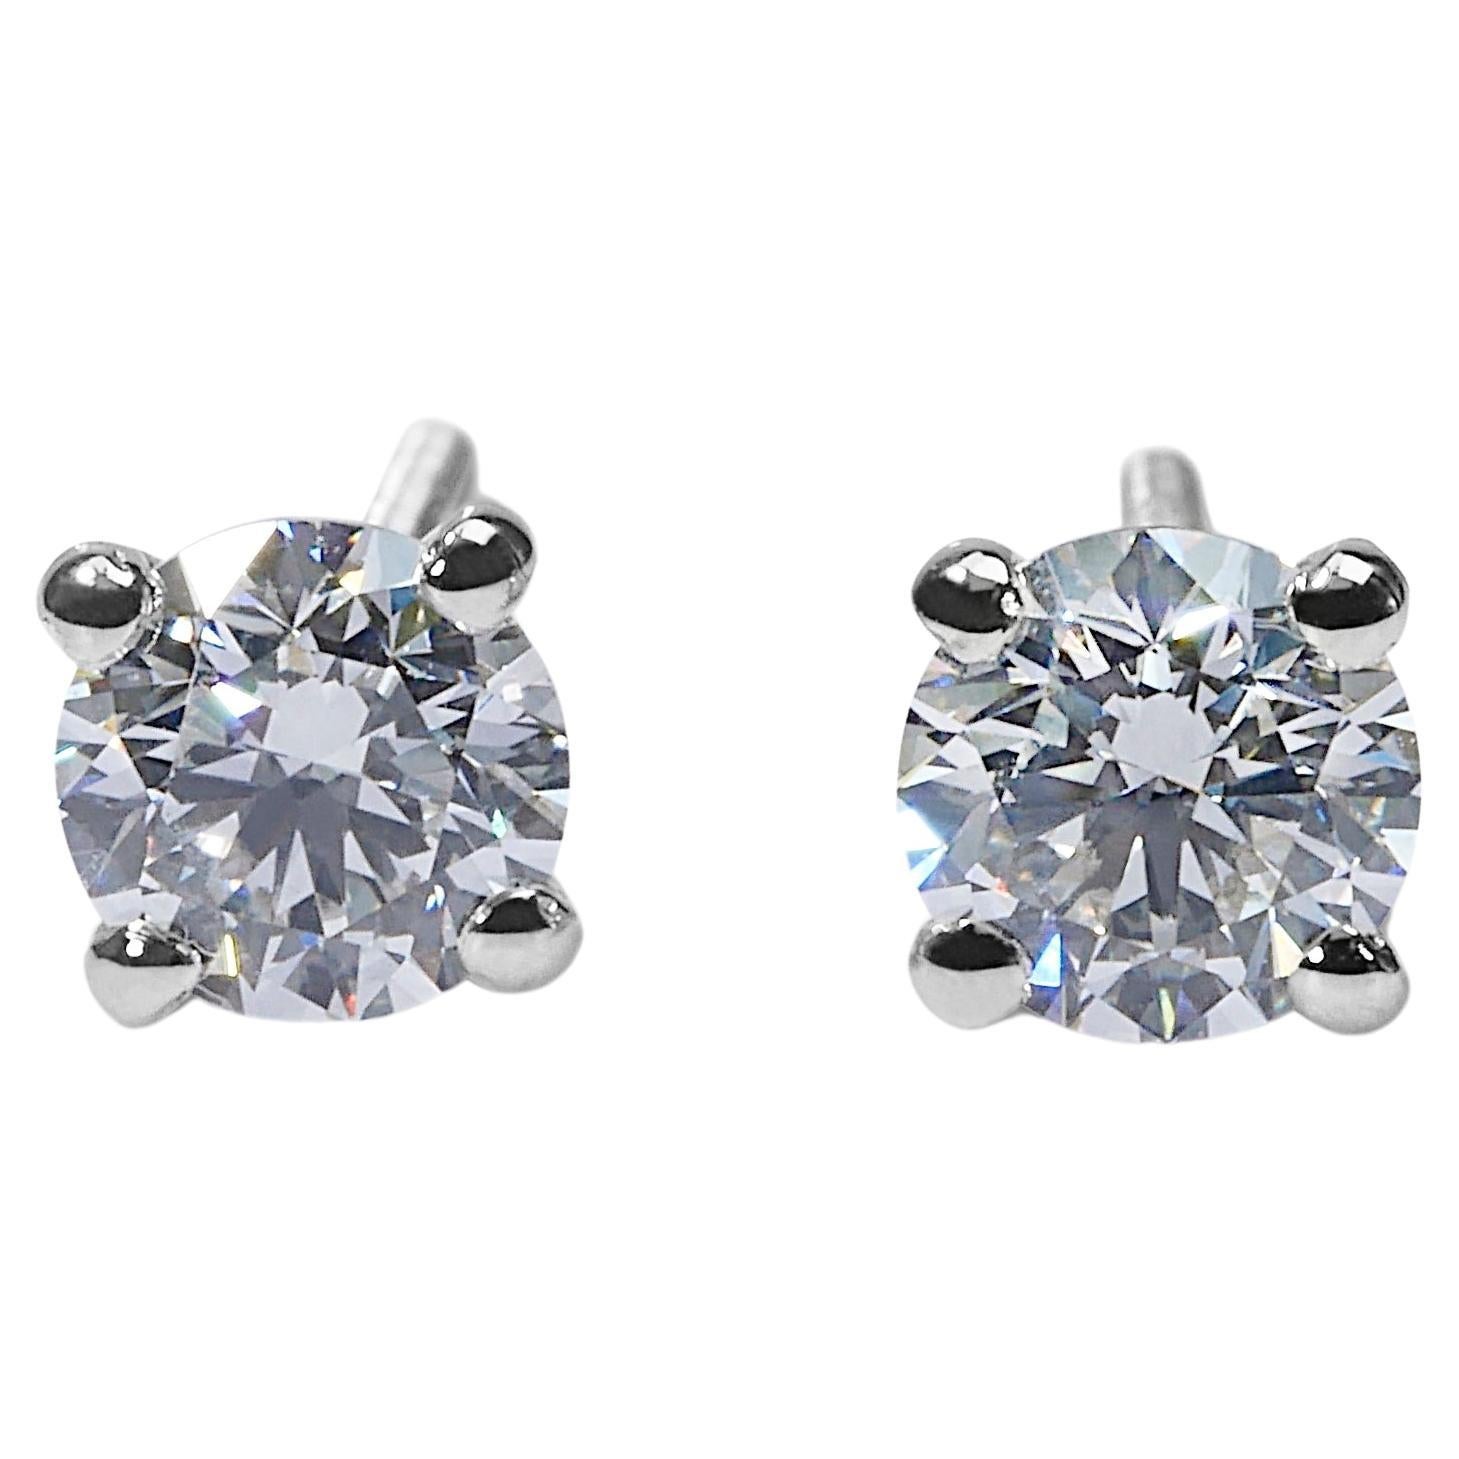 Mesmerizing 2.01ct Diamond Stud Earrings in 18k White Gold - GIA Certified 